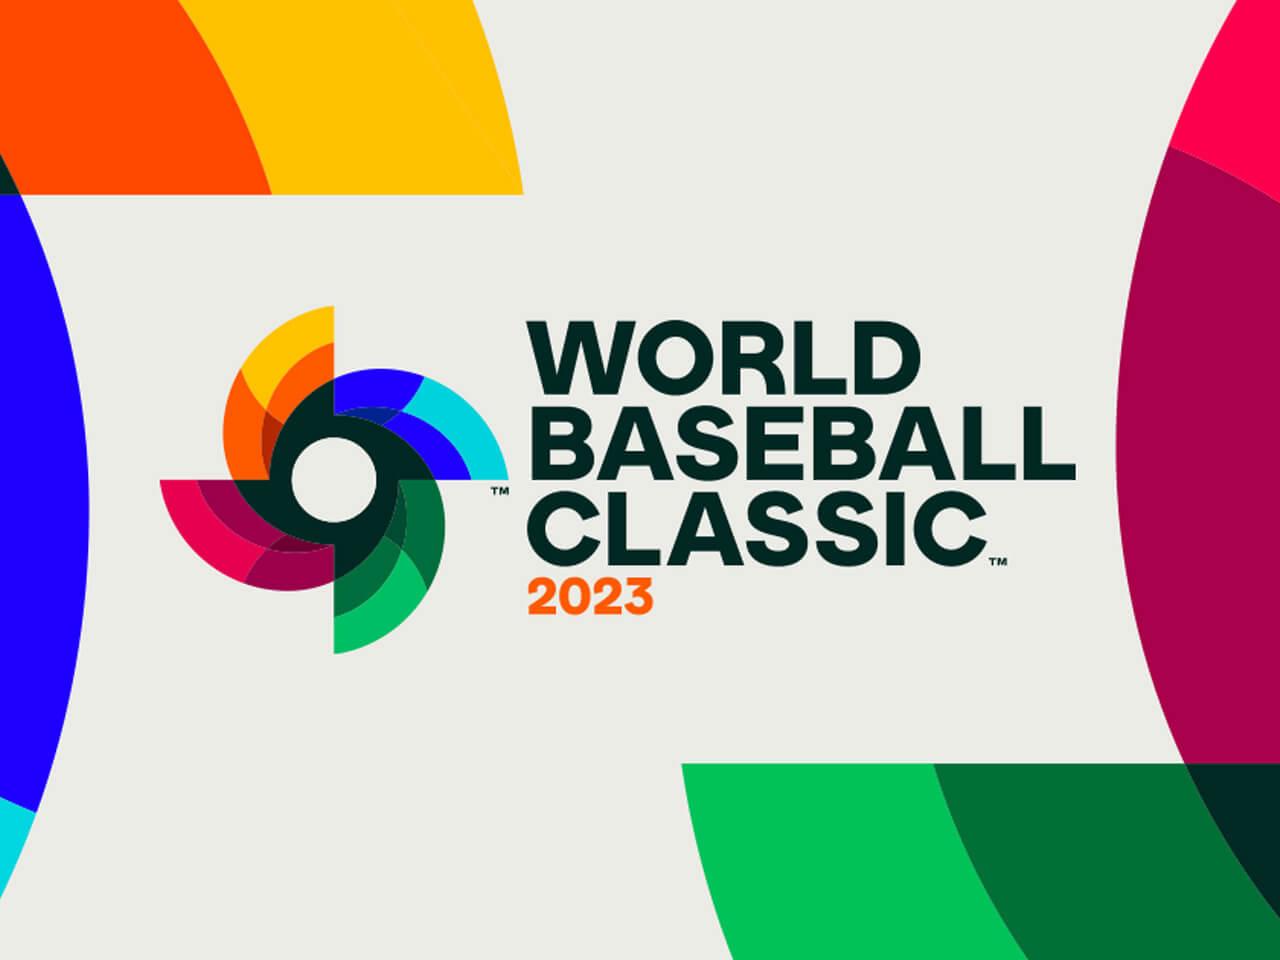  World Baseball Classic 2023